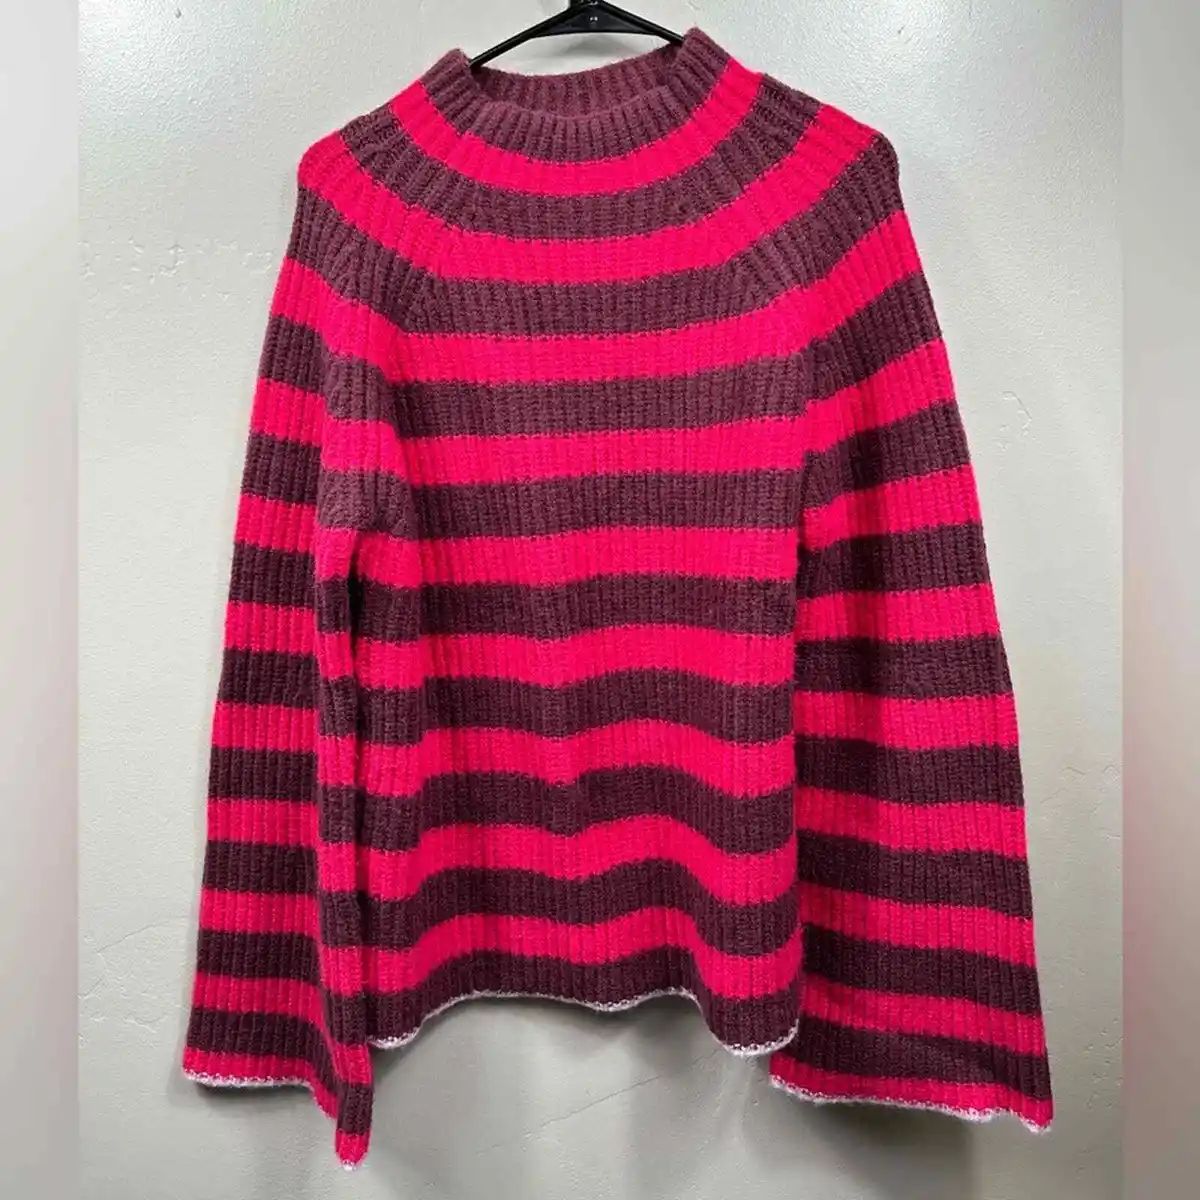 Maeve by Anthropologie Striped Turtleneck Sweater Size Large Burgundy and Pink  | eBay | eBay US